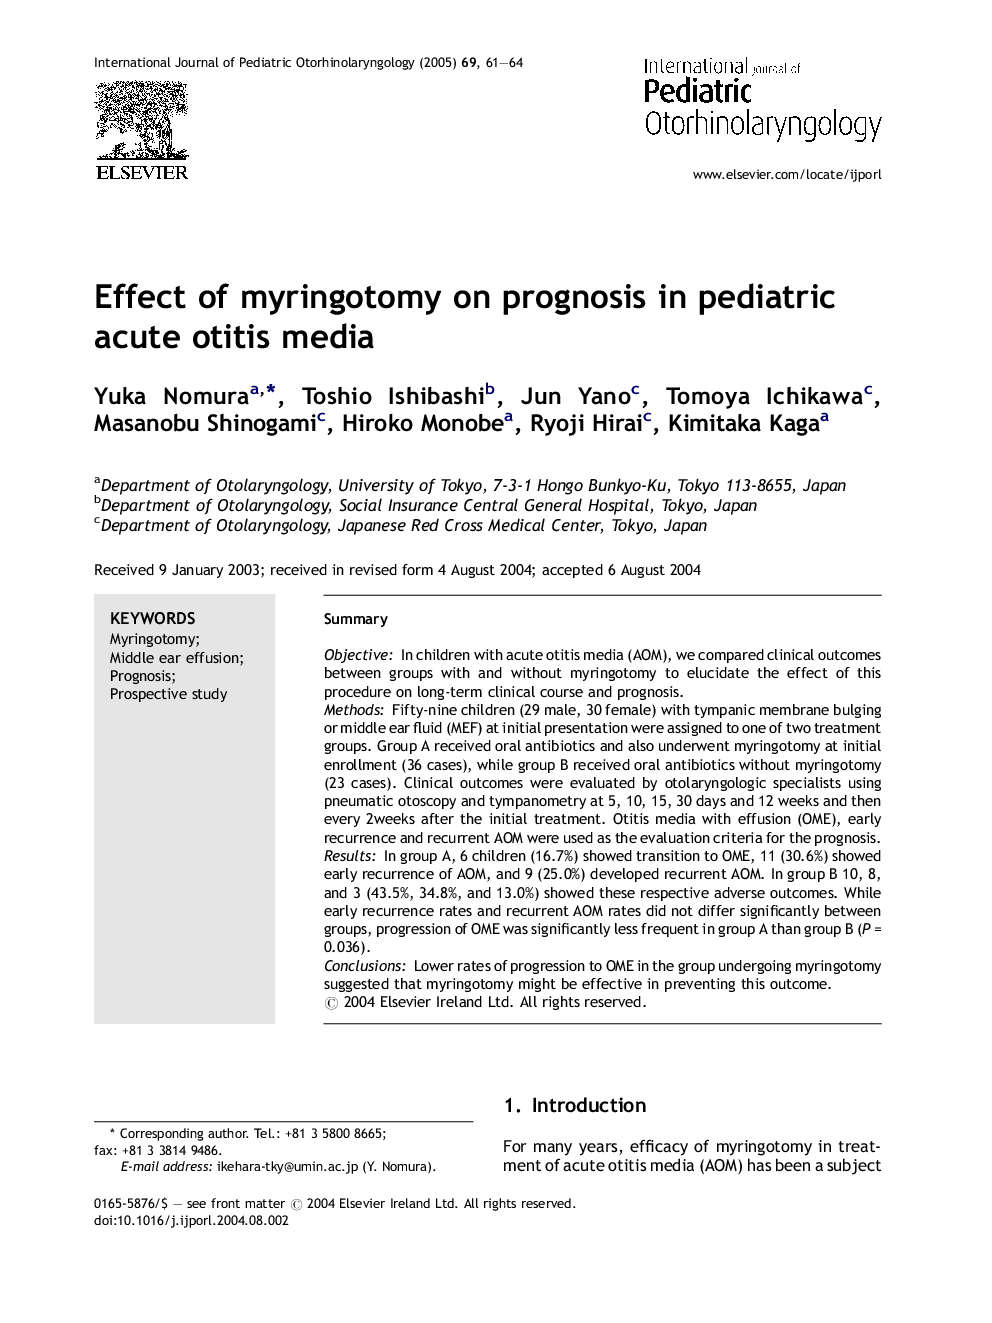 Effect of myringotomy on prognosis in pediatric acute otitis media